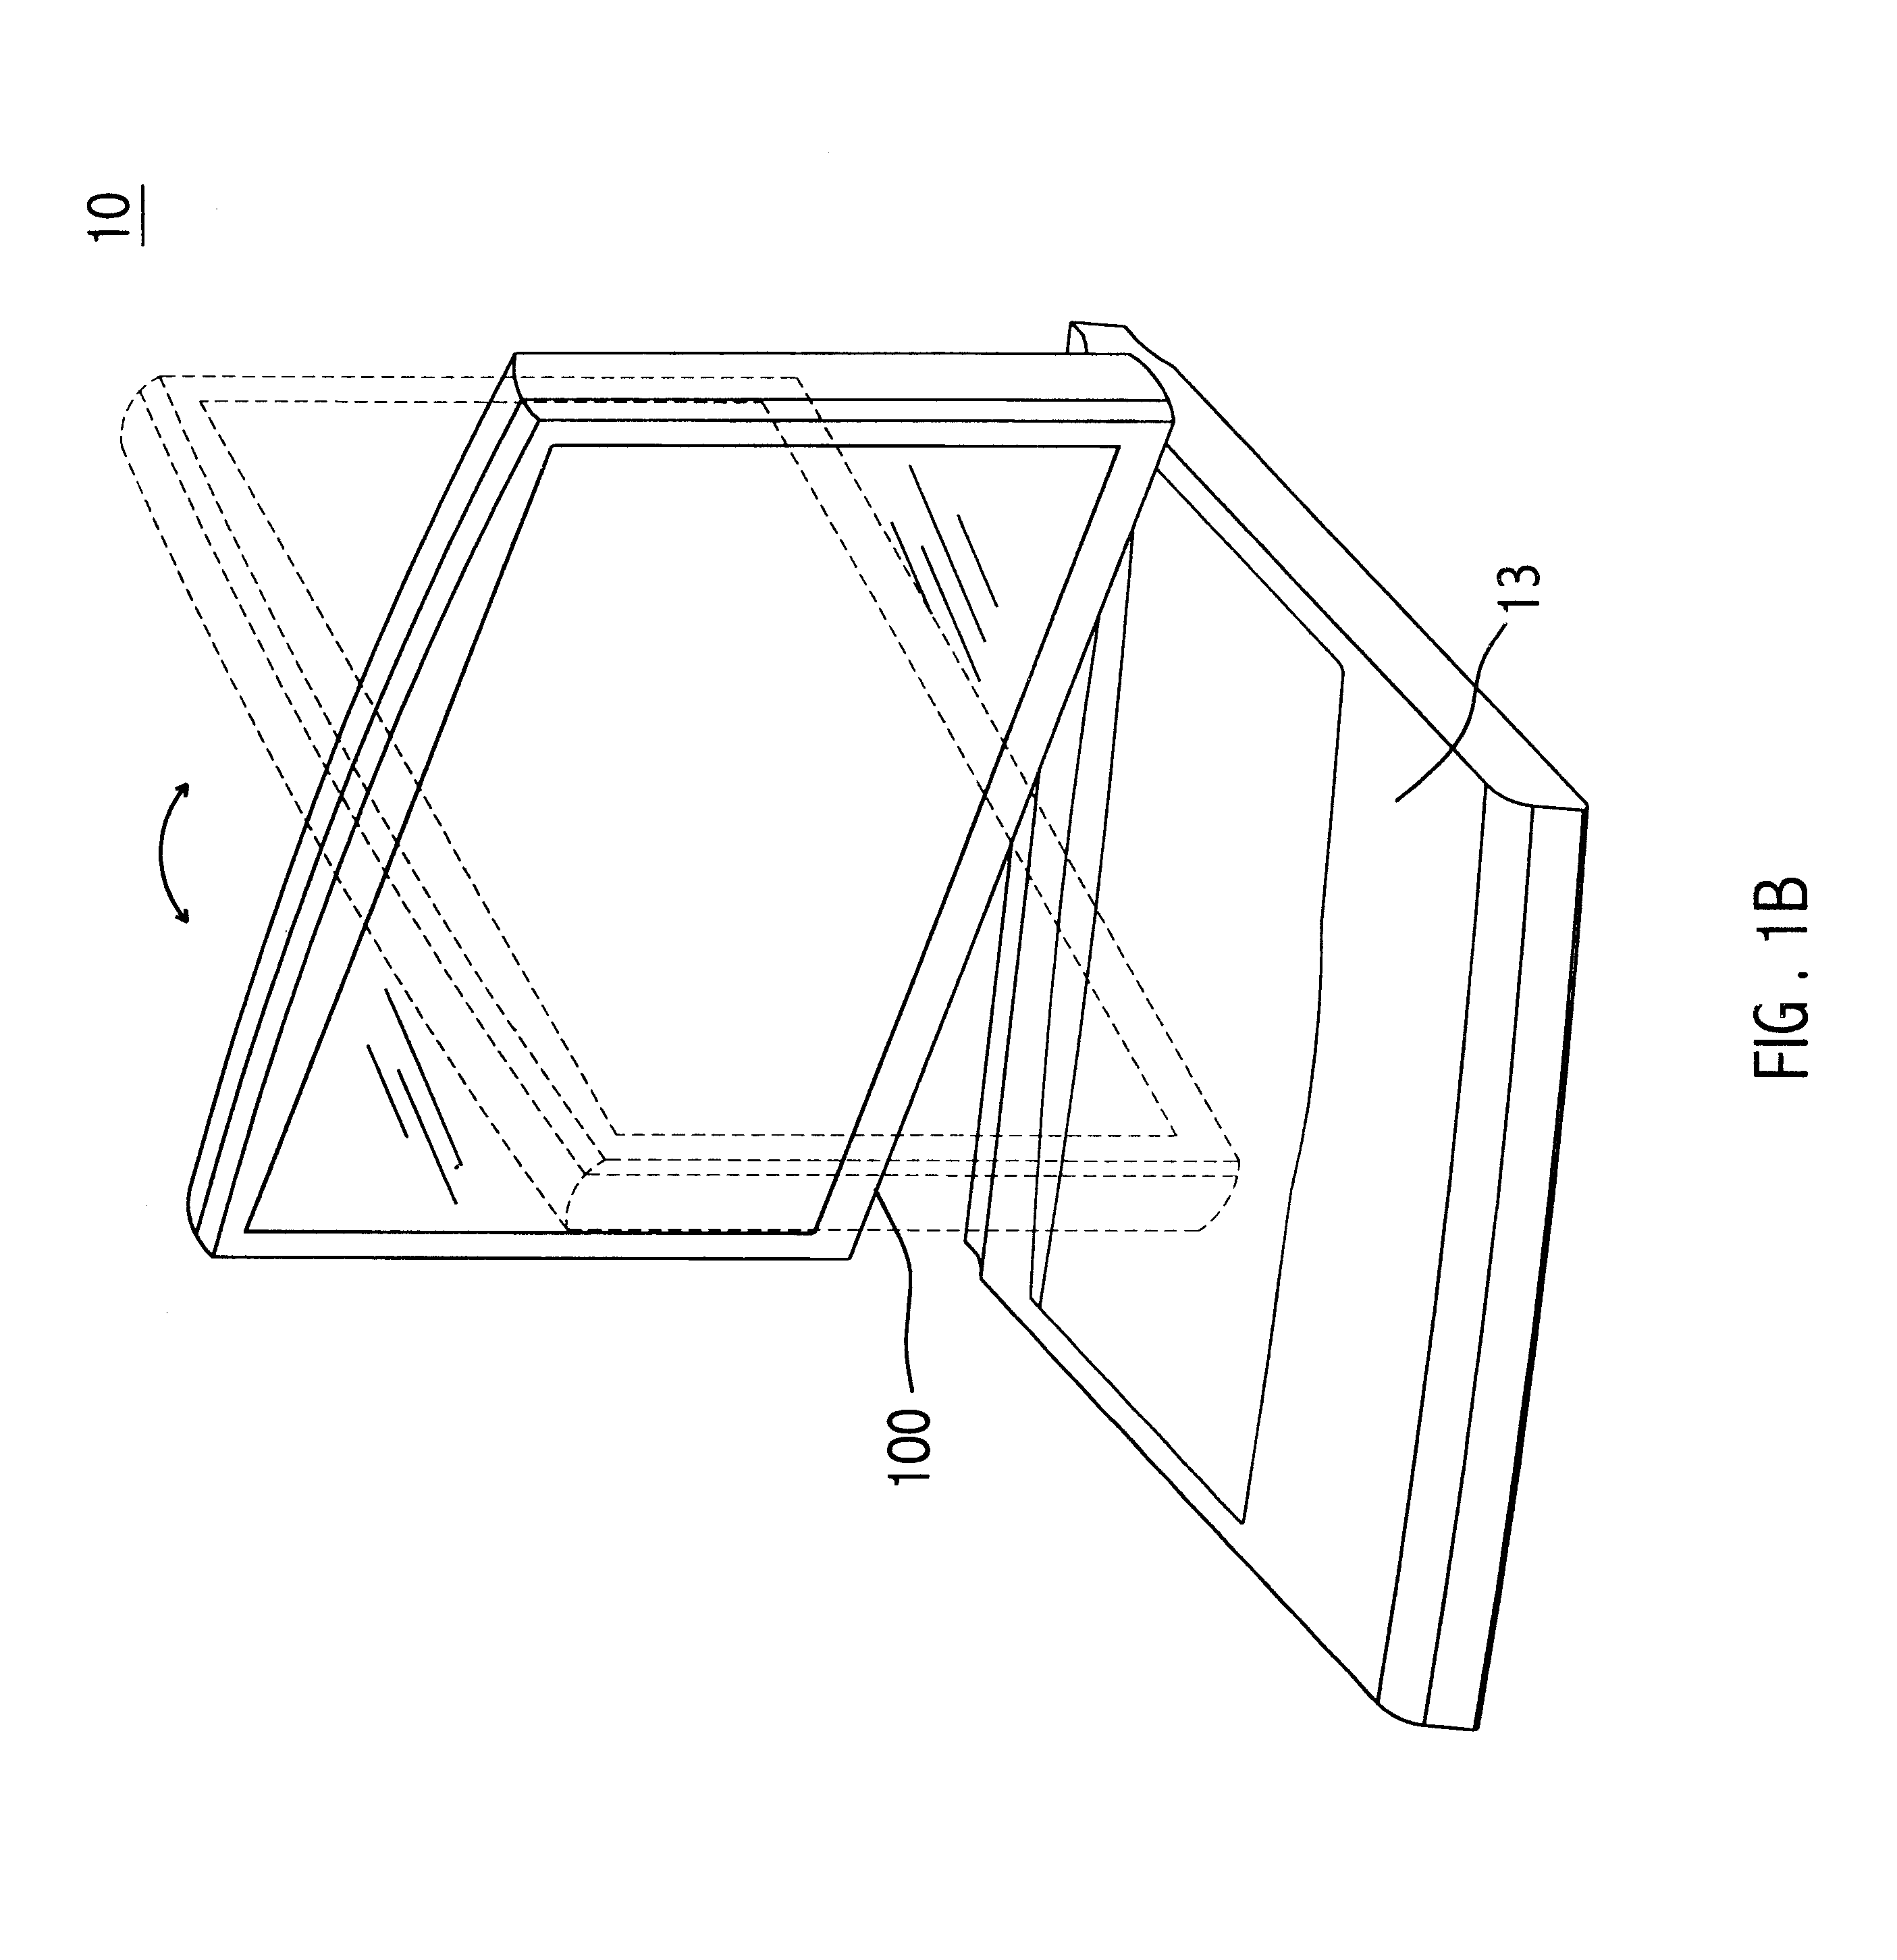 Flat panel display apparatus and tilt/swivel mechanism therein